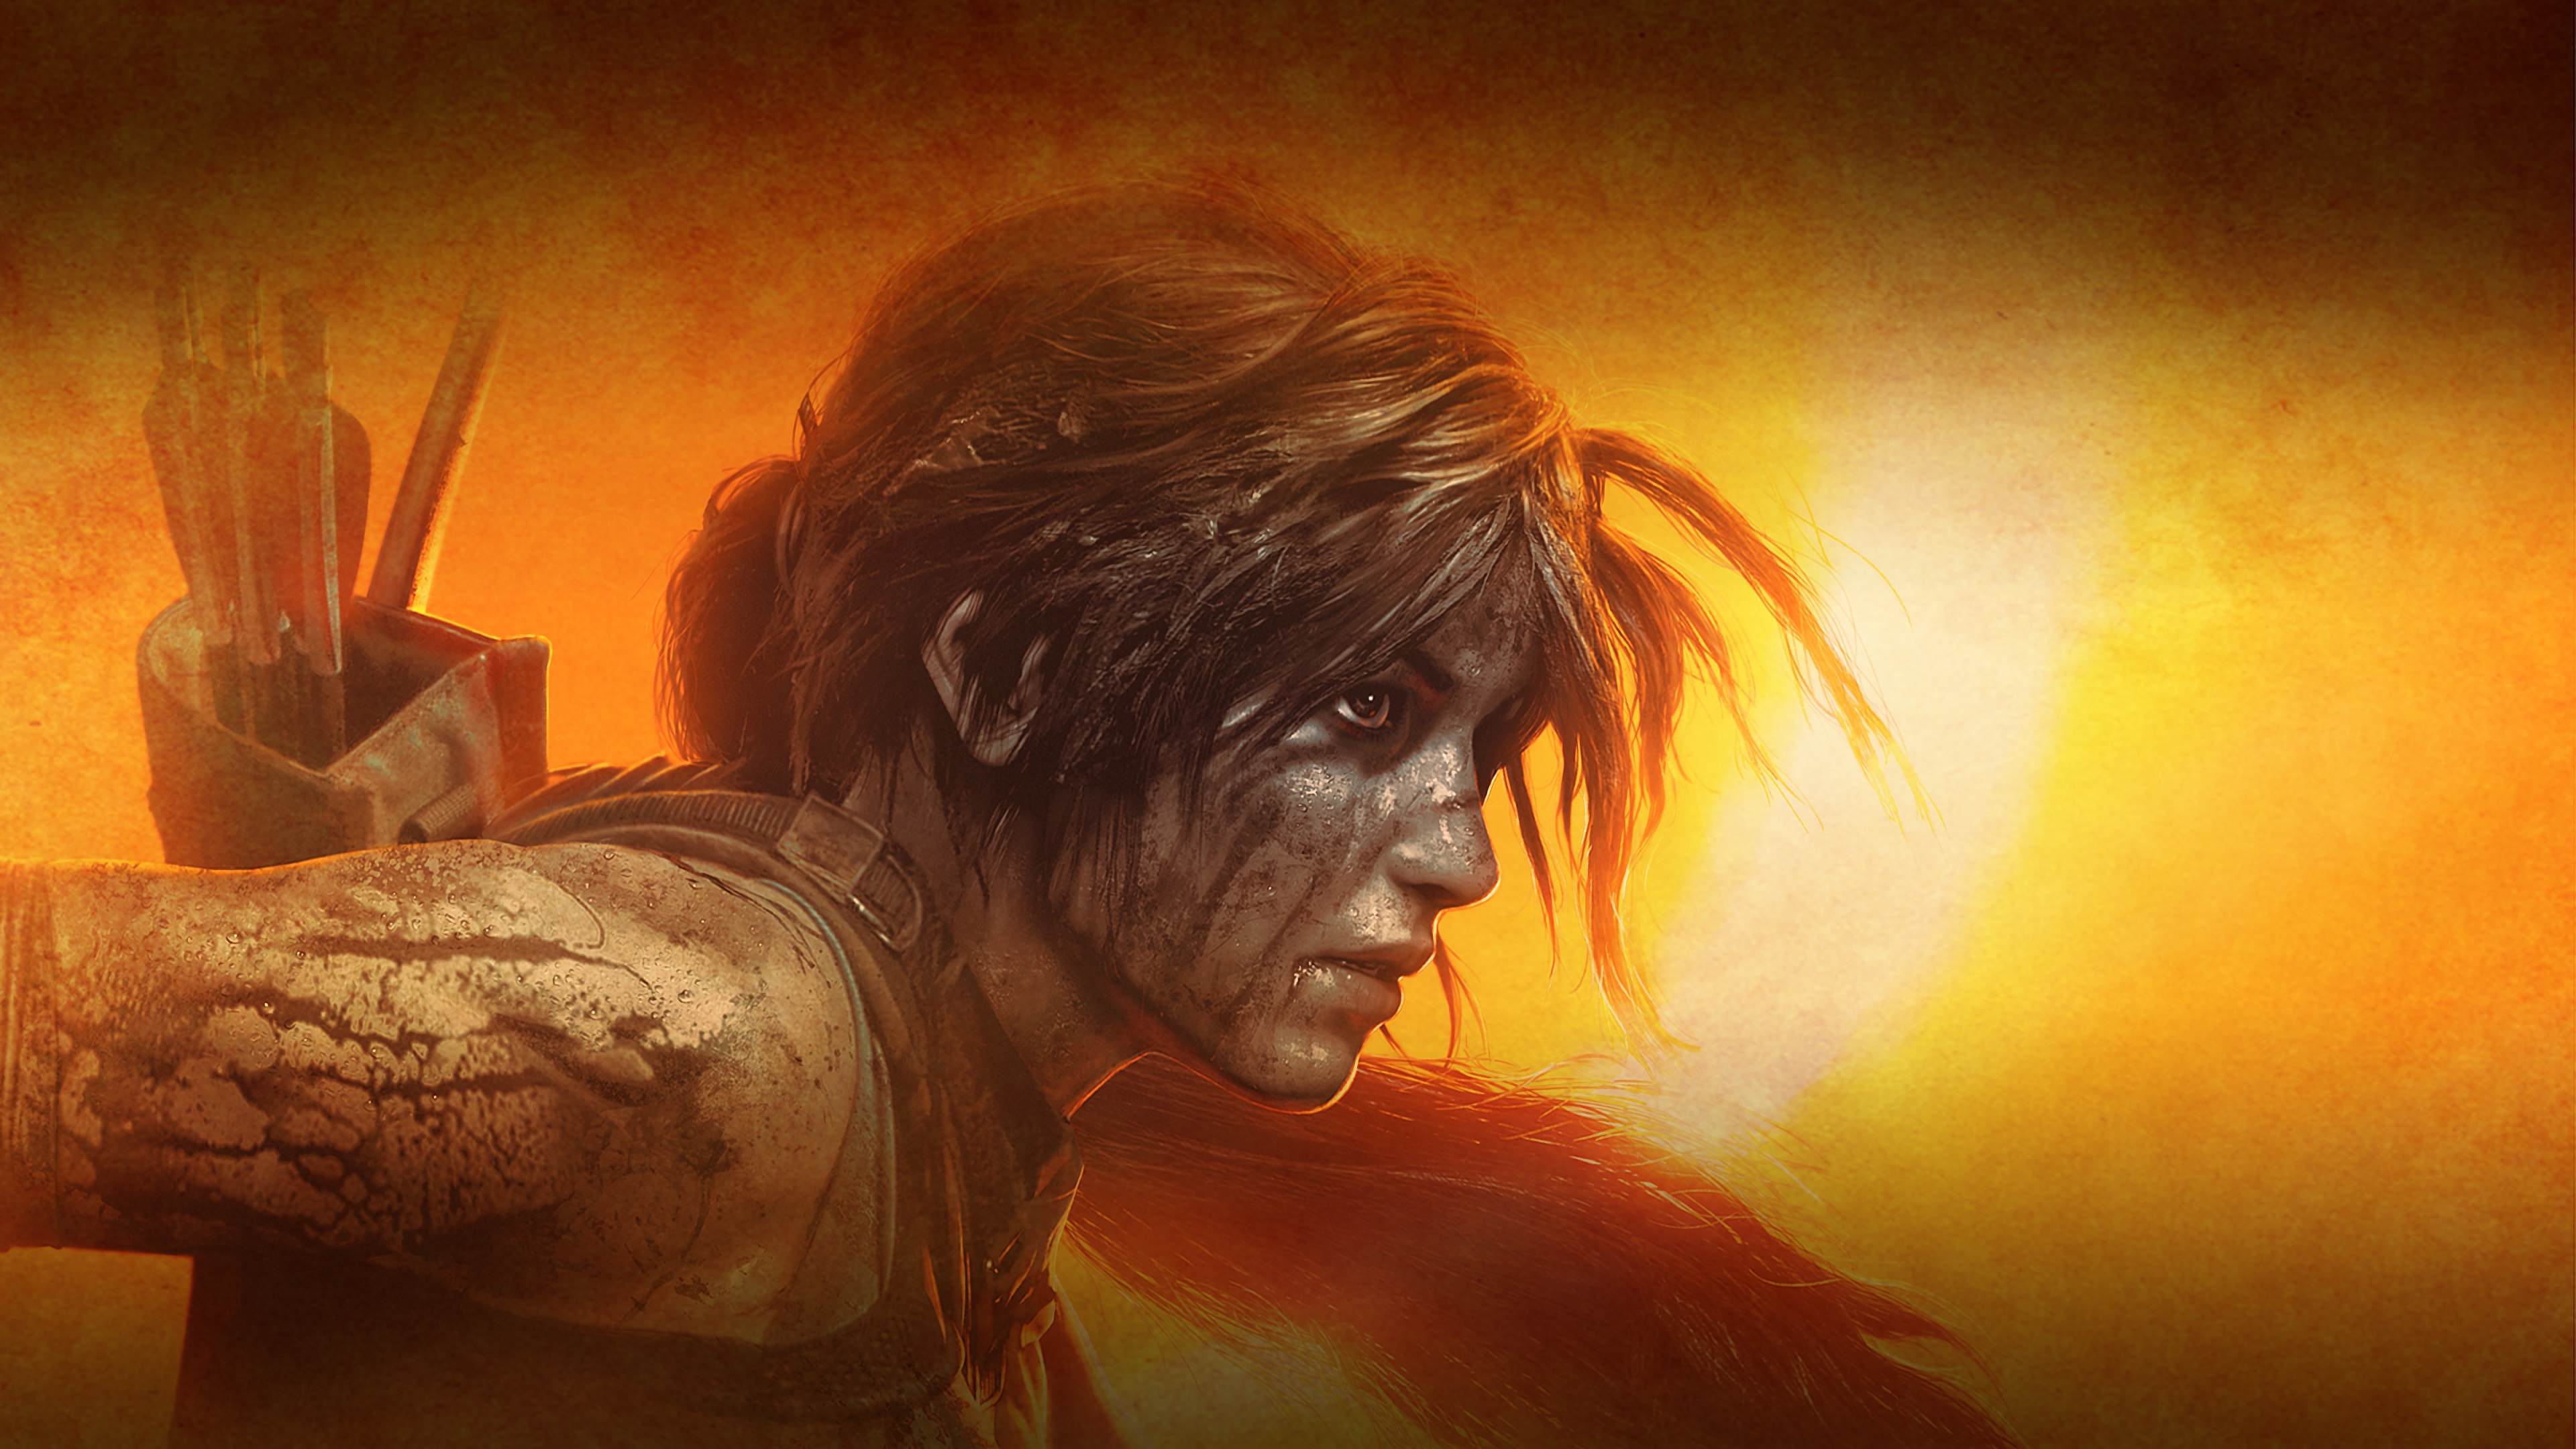 lara croft, video game, shadow of the tomb raider, tomb raider